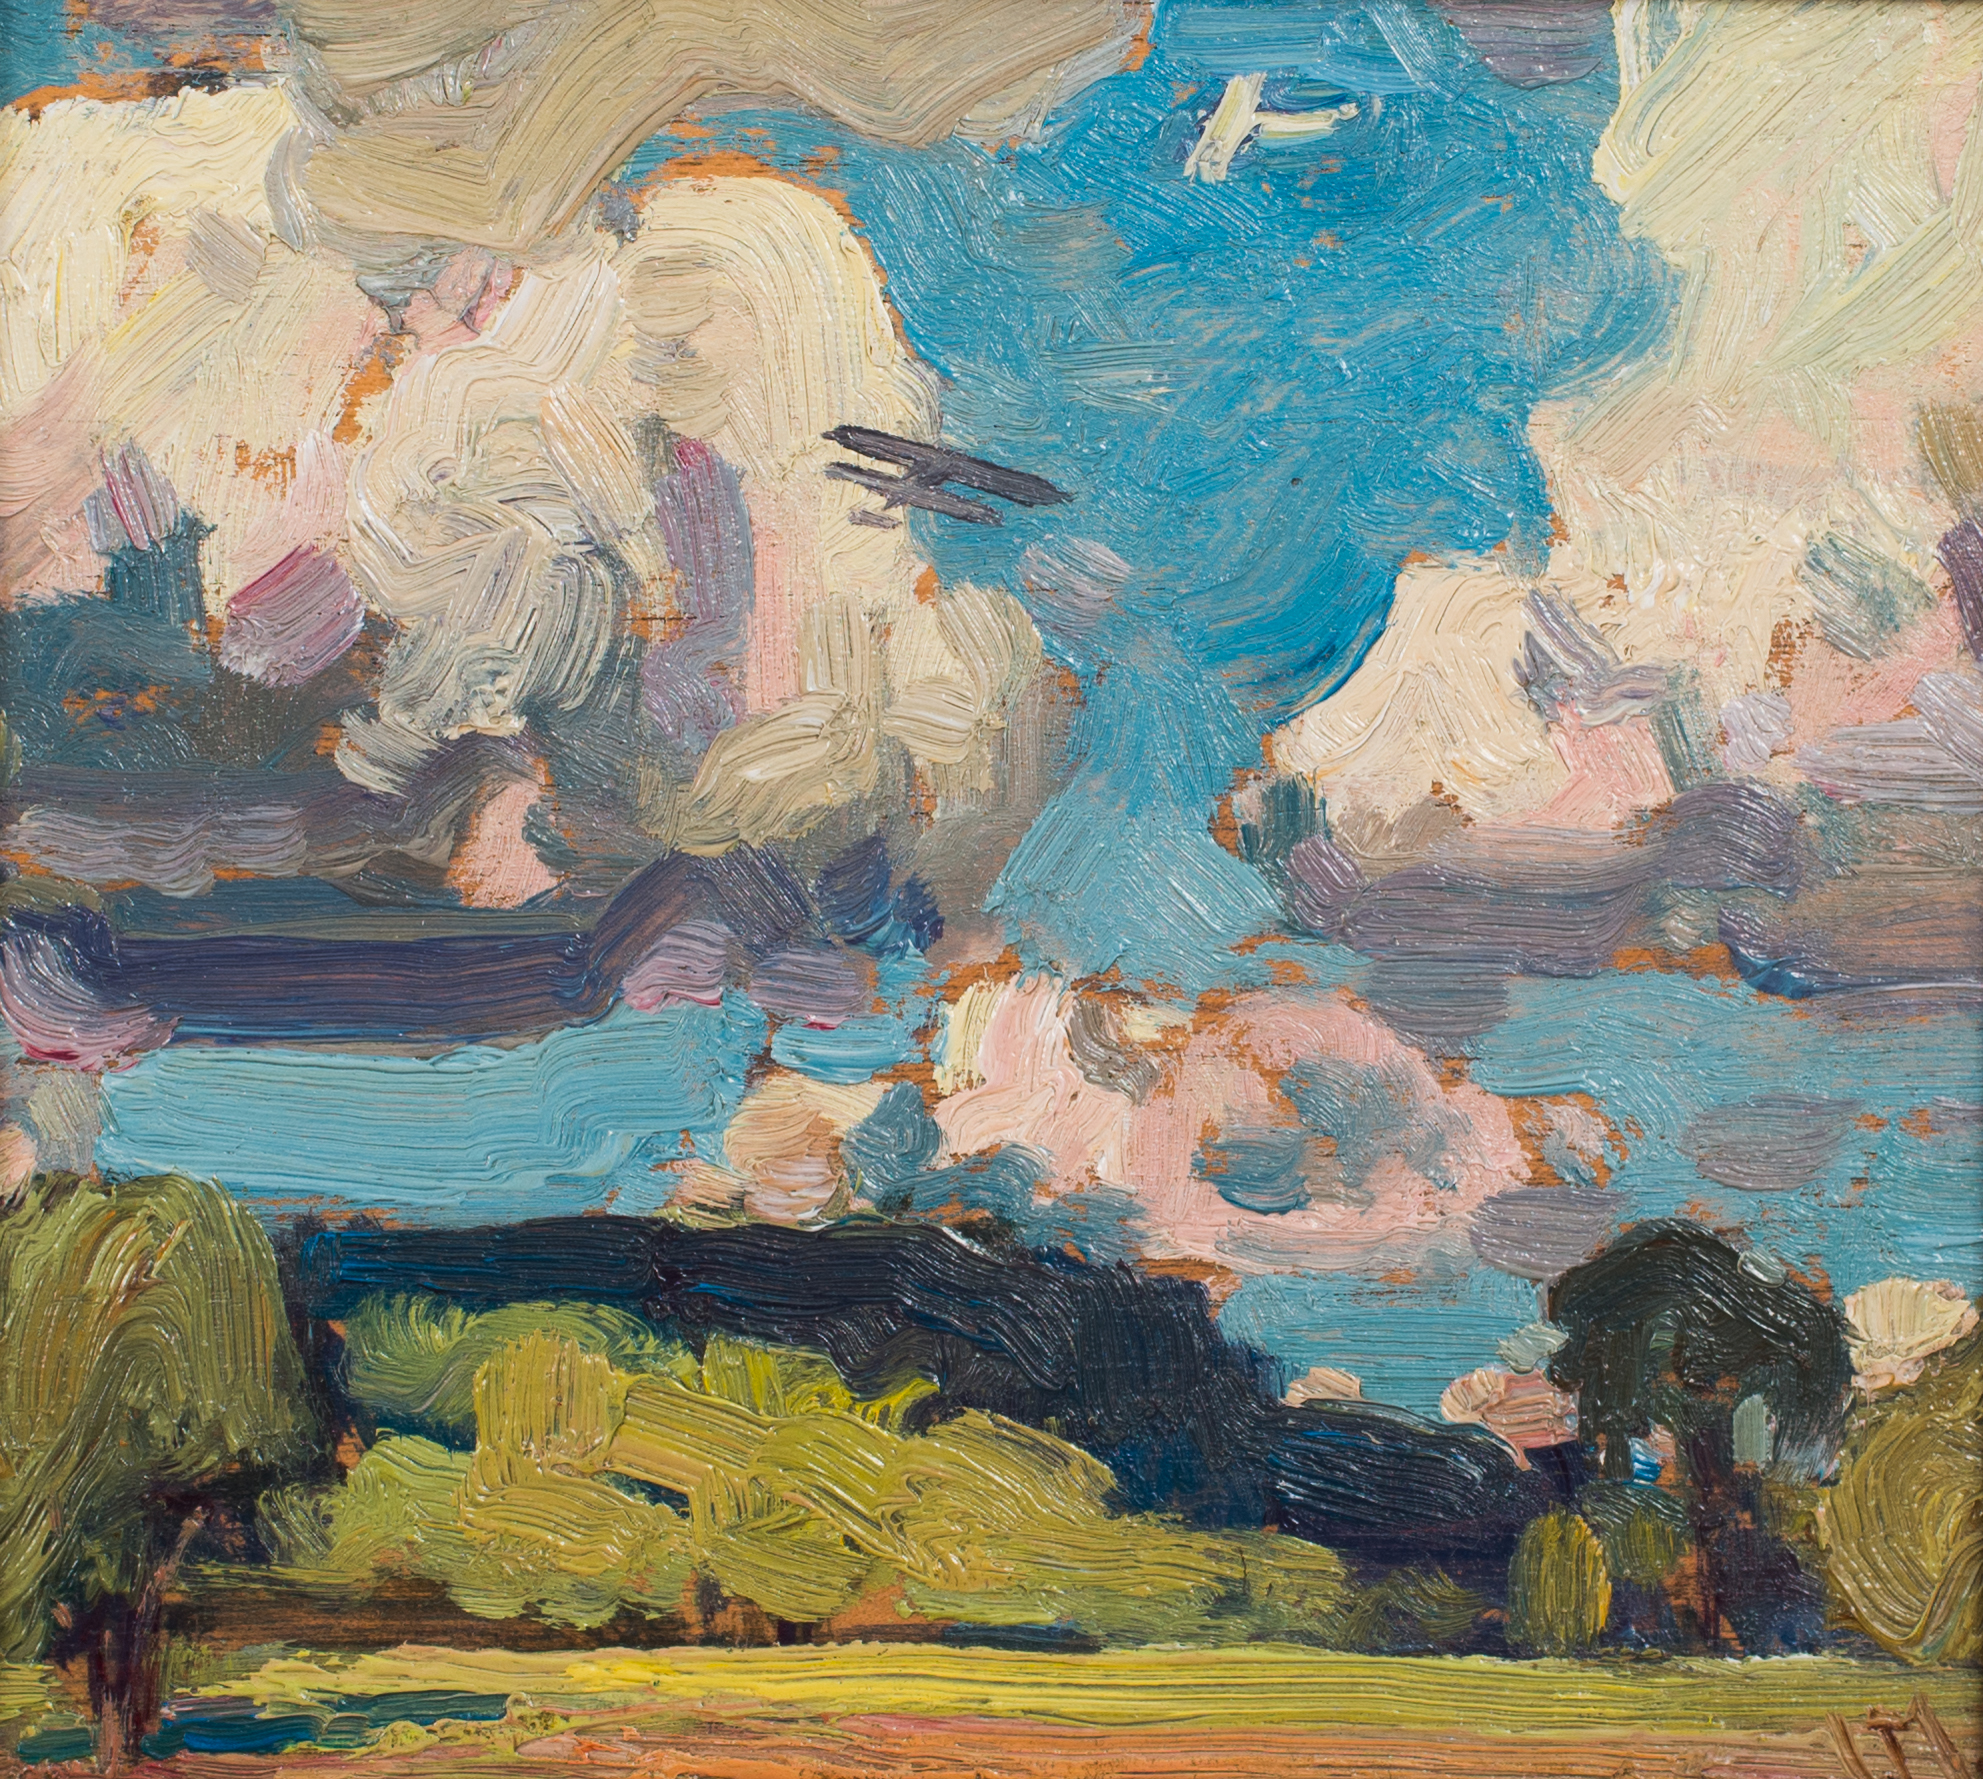 James Edward Hervey MacDonald (1873-1932), York Mills, 1918, oil on wood panel